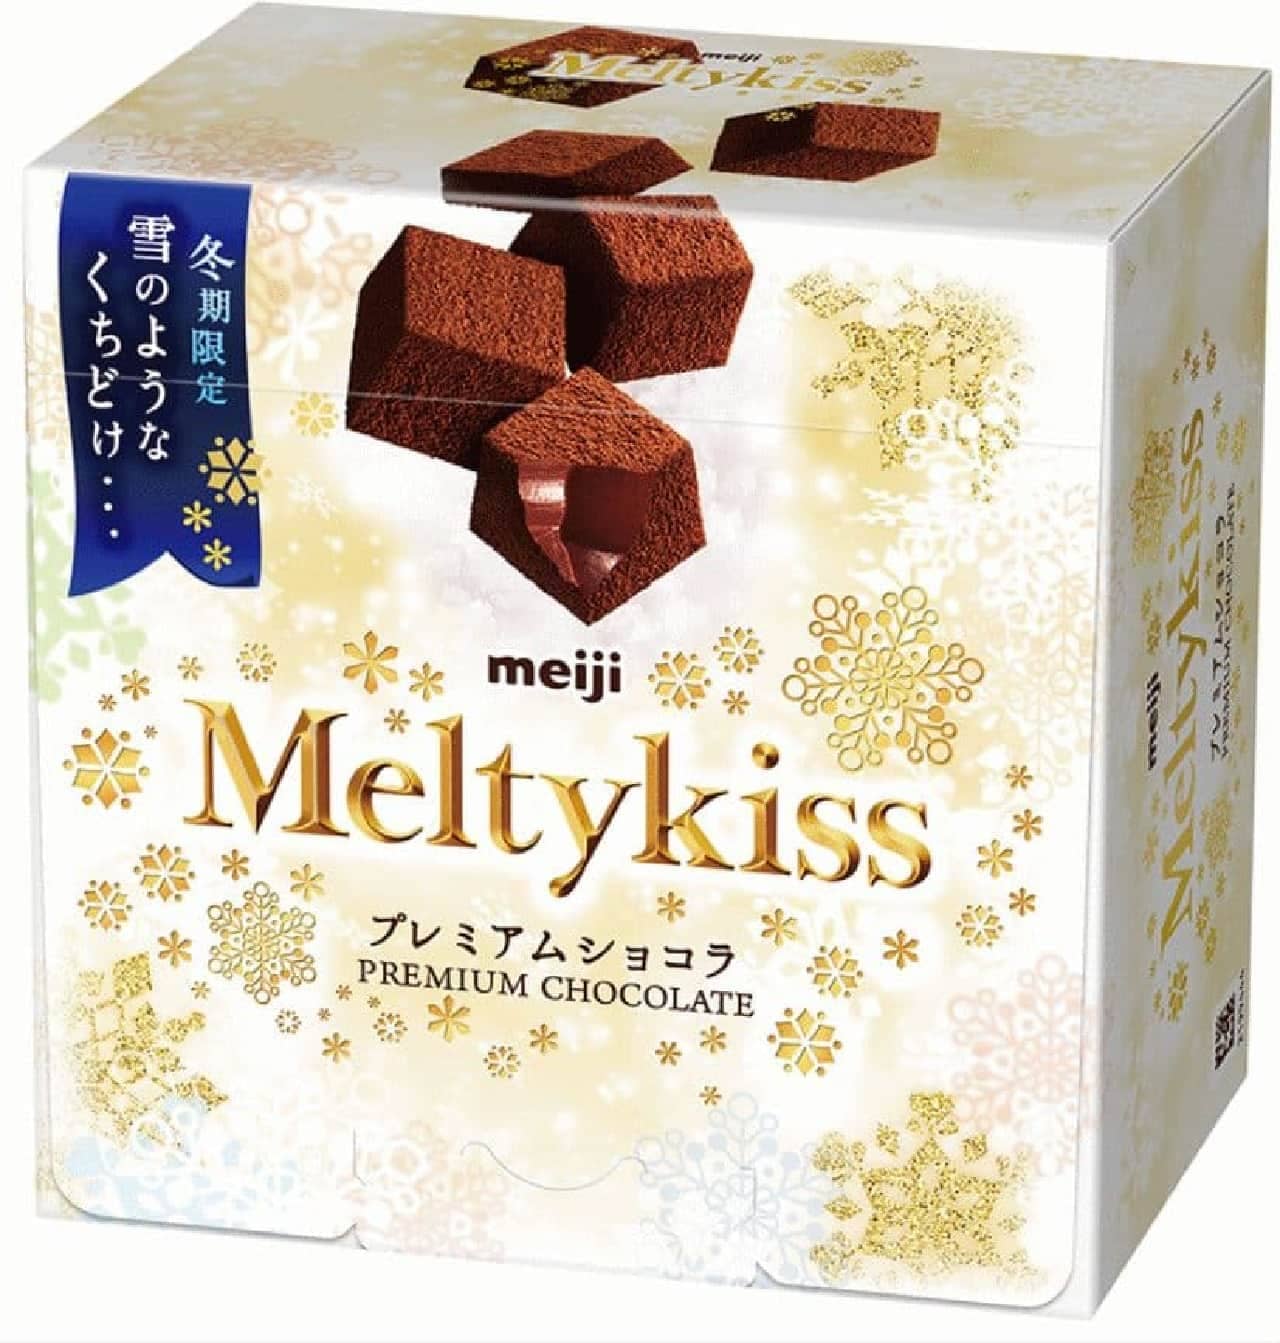 Meiji "Meltykiss Premium Chocolat